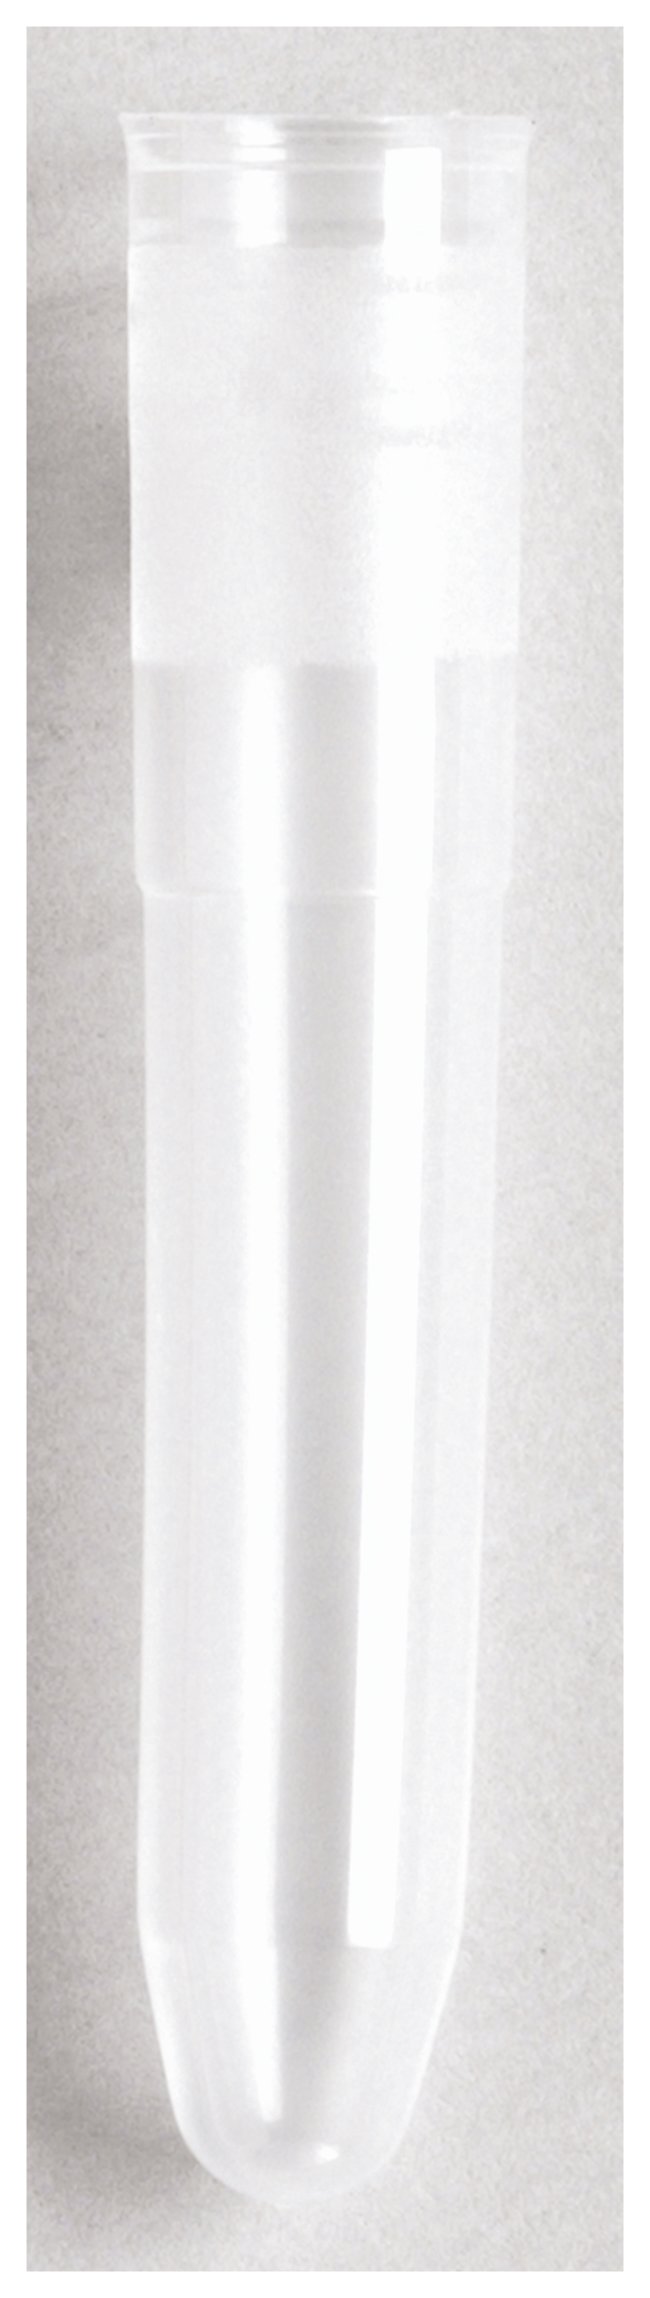 Polypropylene Microtiter Tubes, Plain tubes; Nonsterile; Bagged